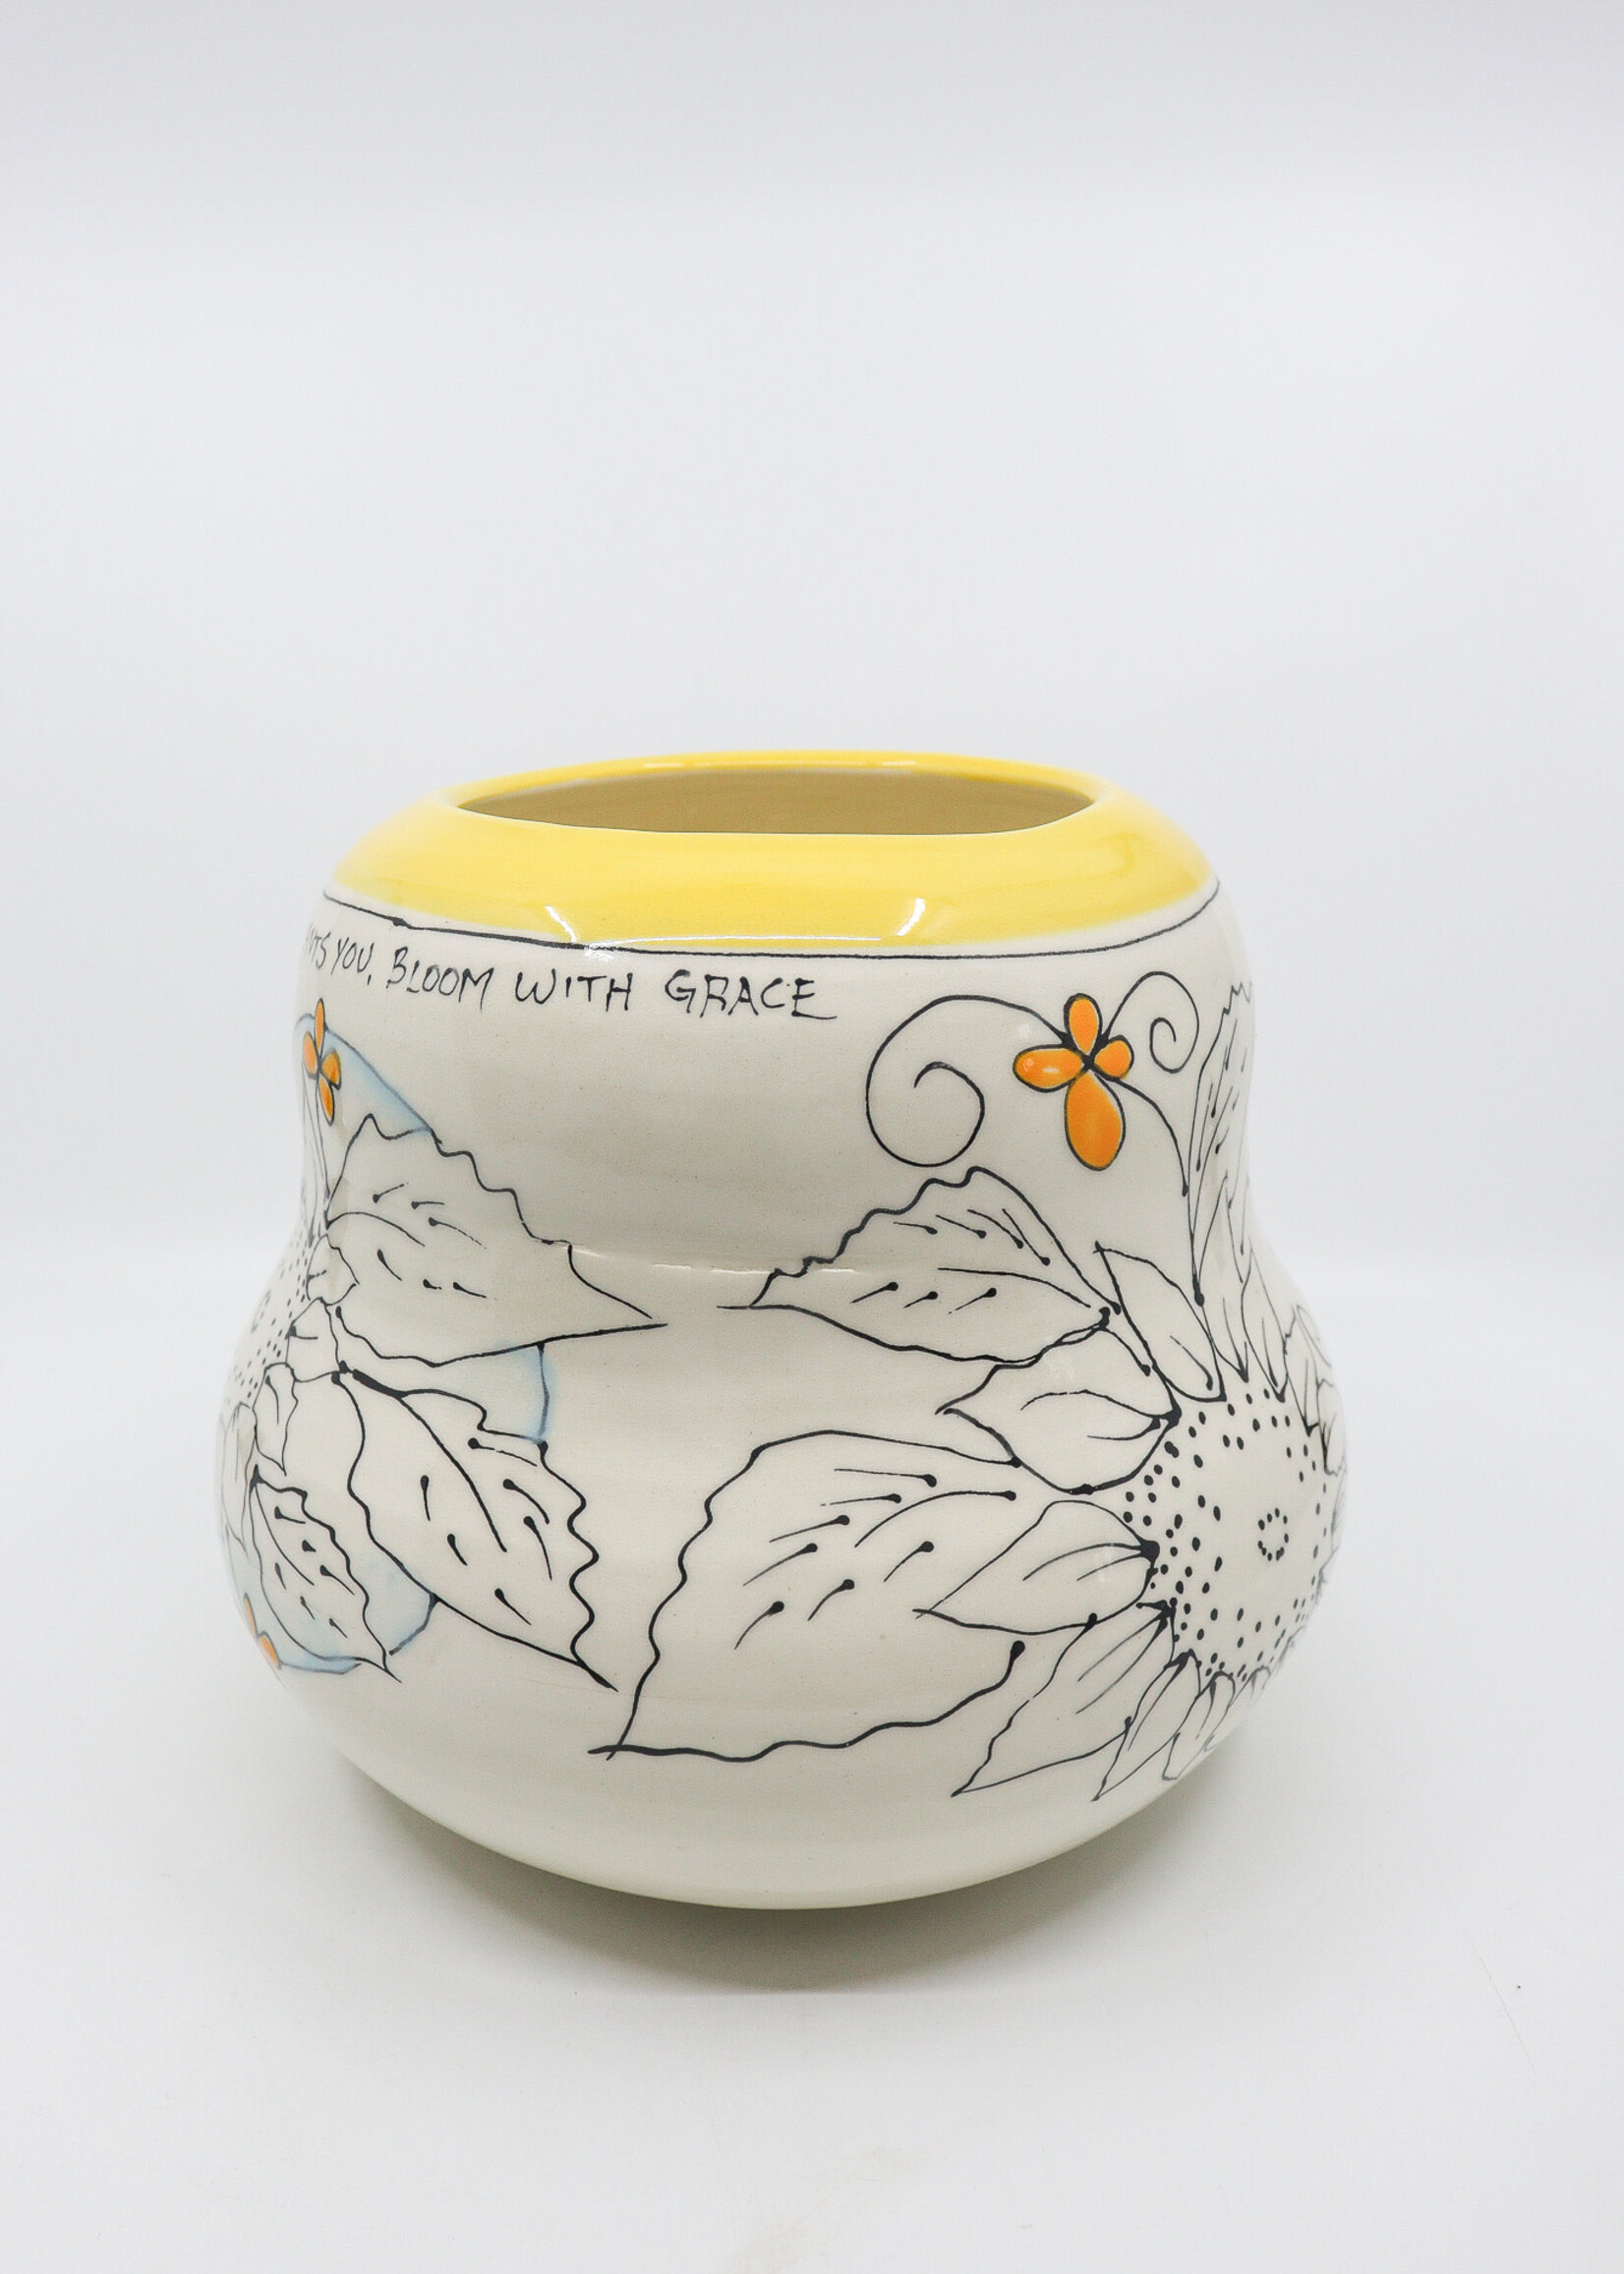 CERAMICS - Medium Vase, Yellow Sunflowers, "Whatever Life Plants You, Bloom with Grace"